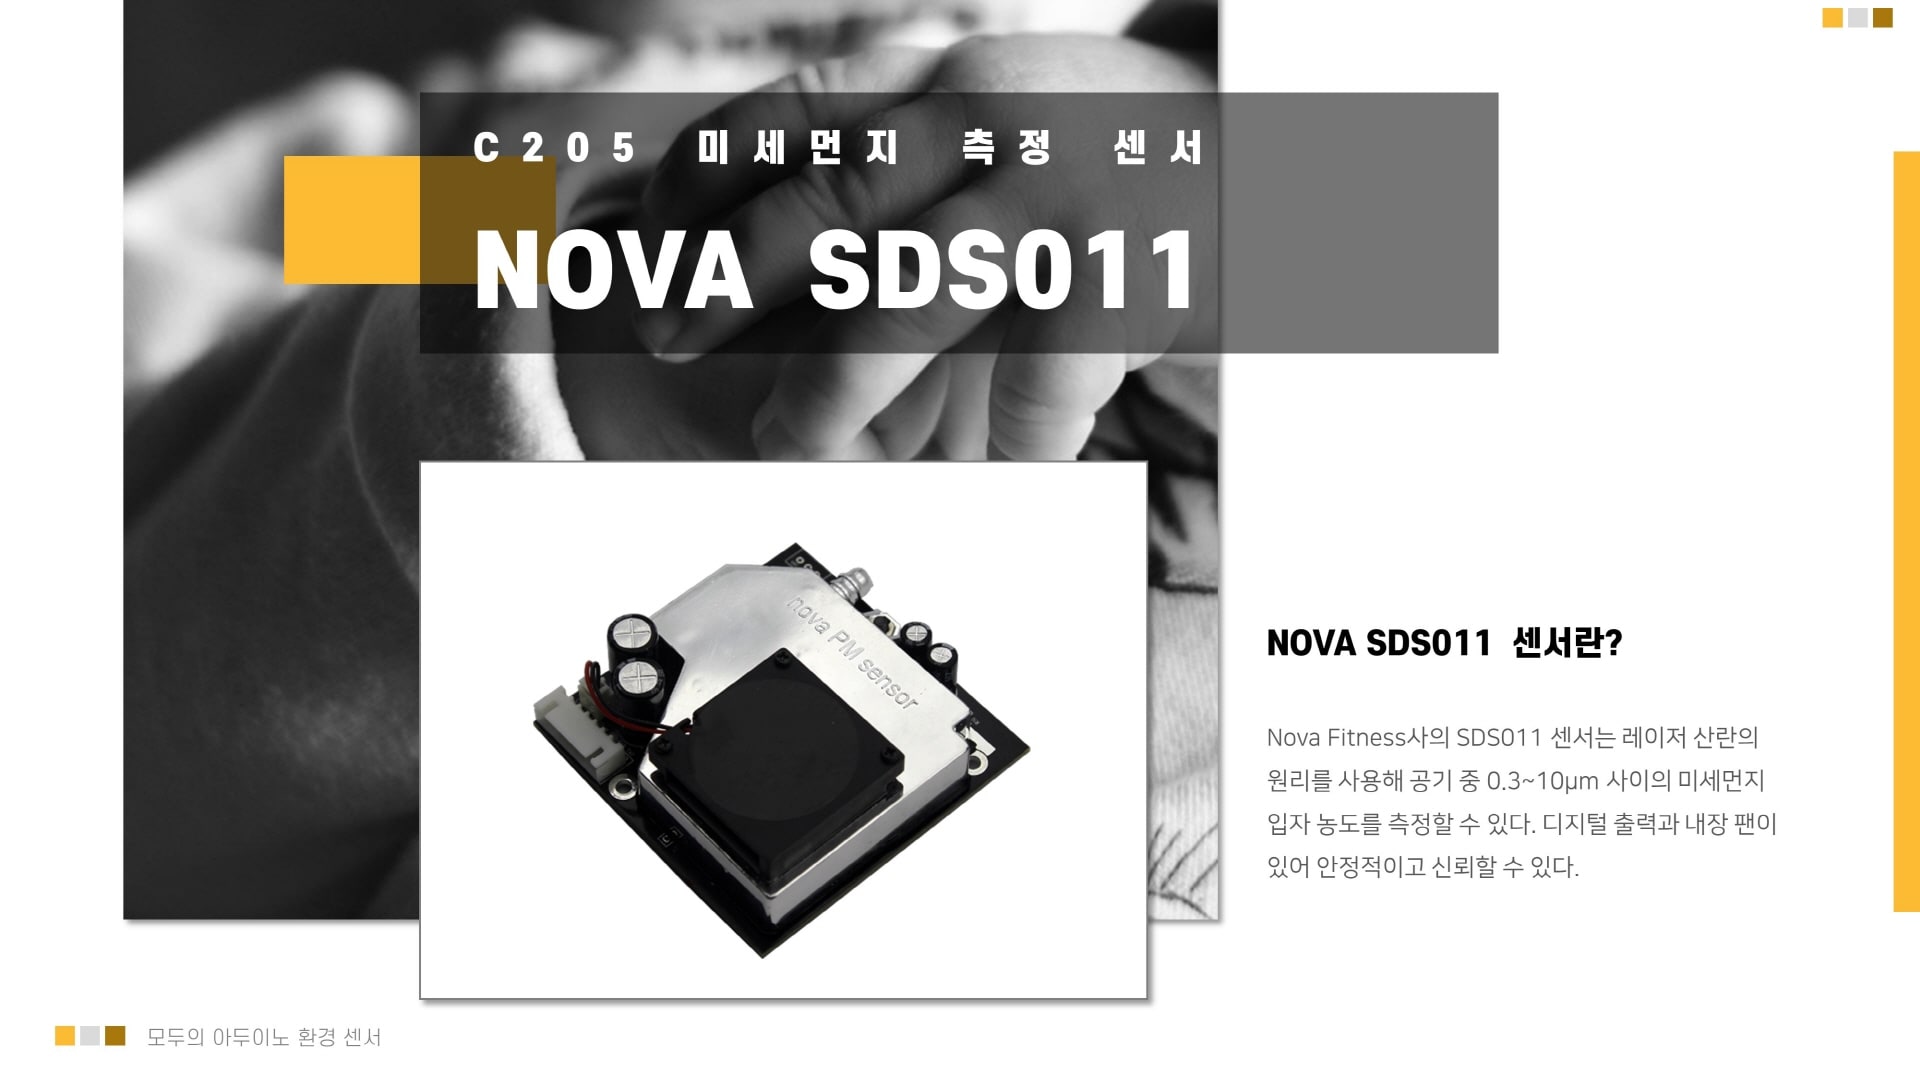 Nova sds011 미세먼지 아두이노 센서 이미지 입니다.